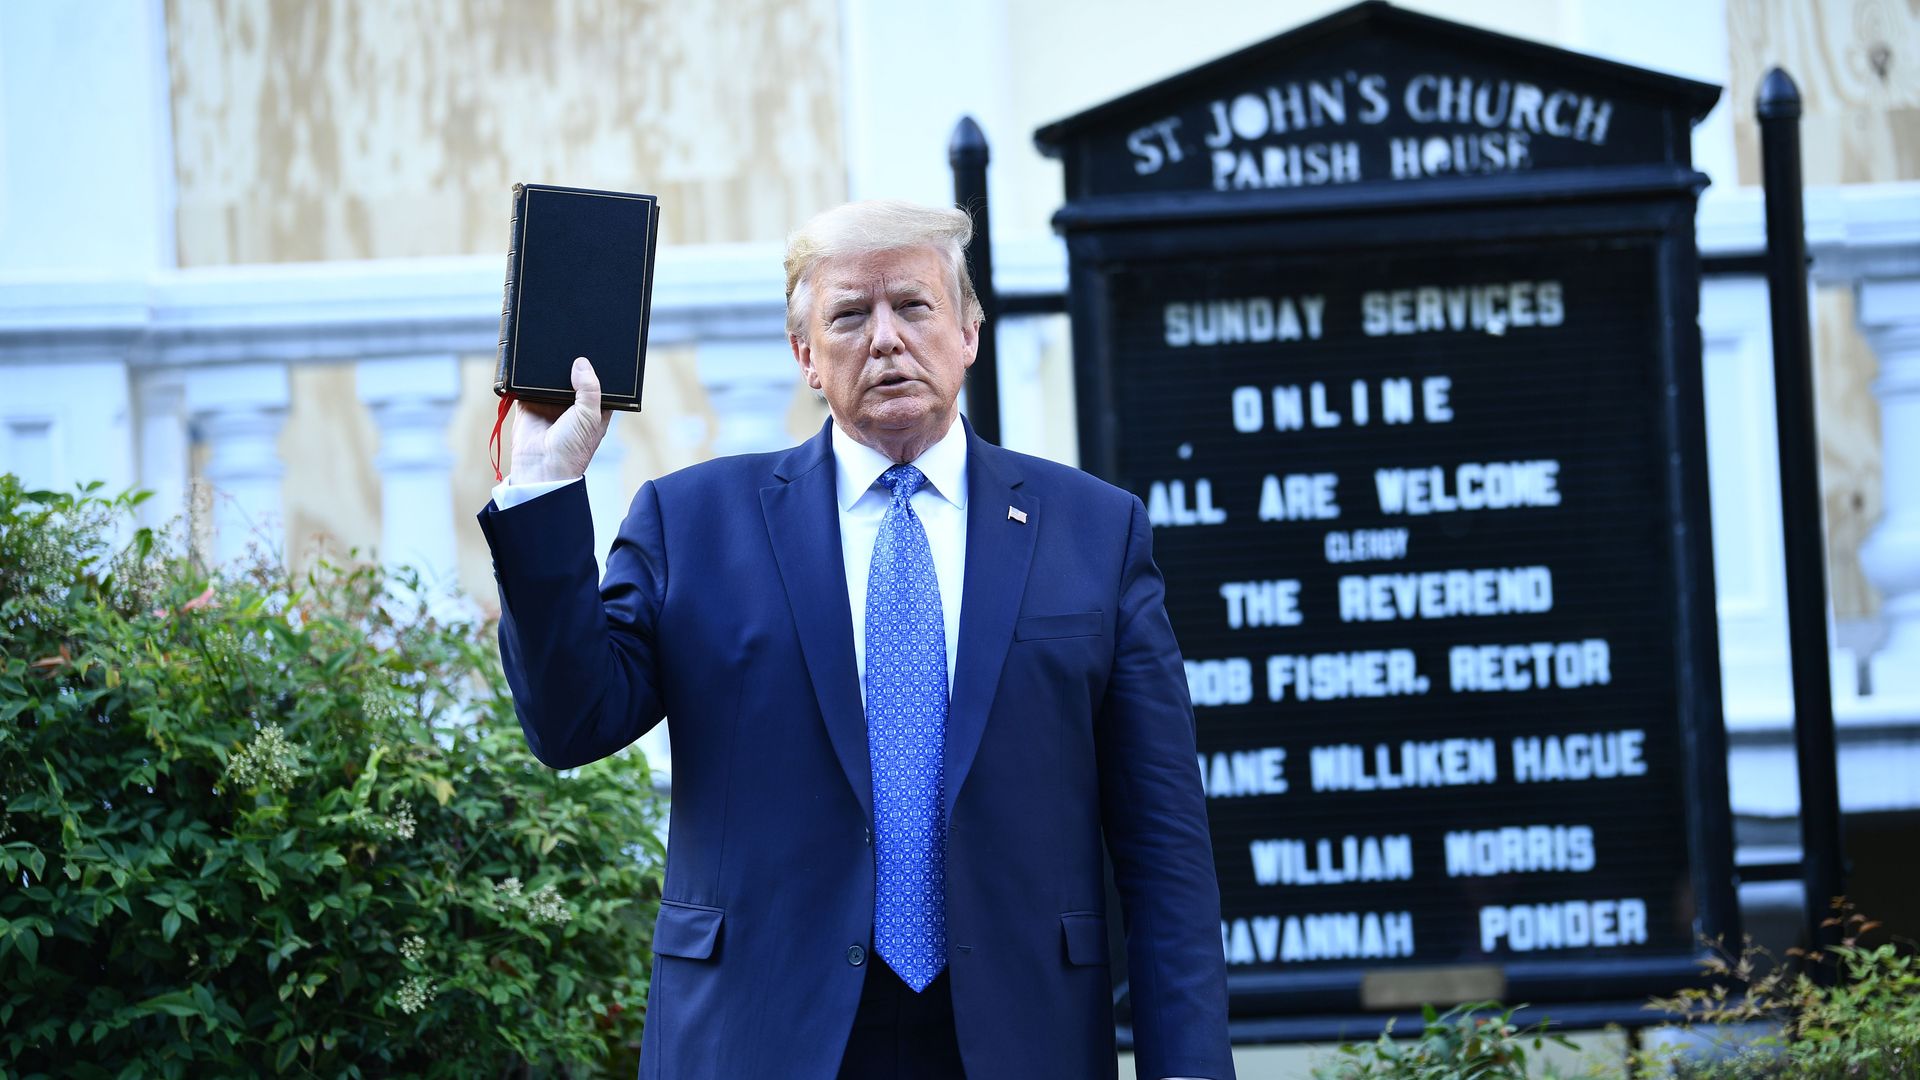 Photo of Donald Trump holding up a black Bible next to a St. John's Church sign